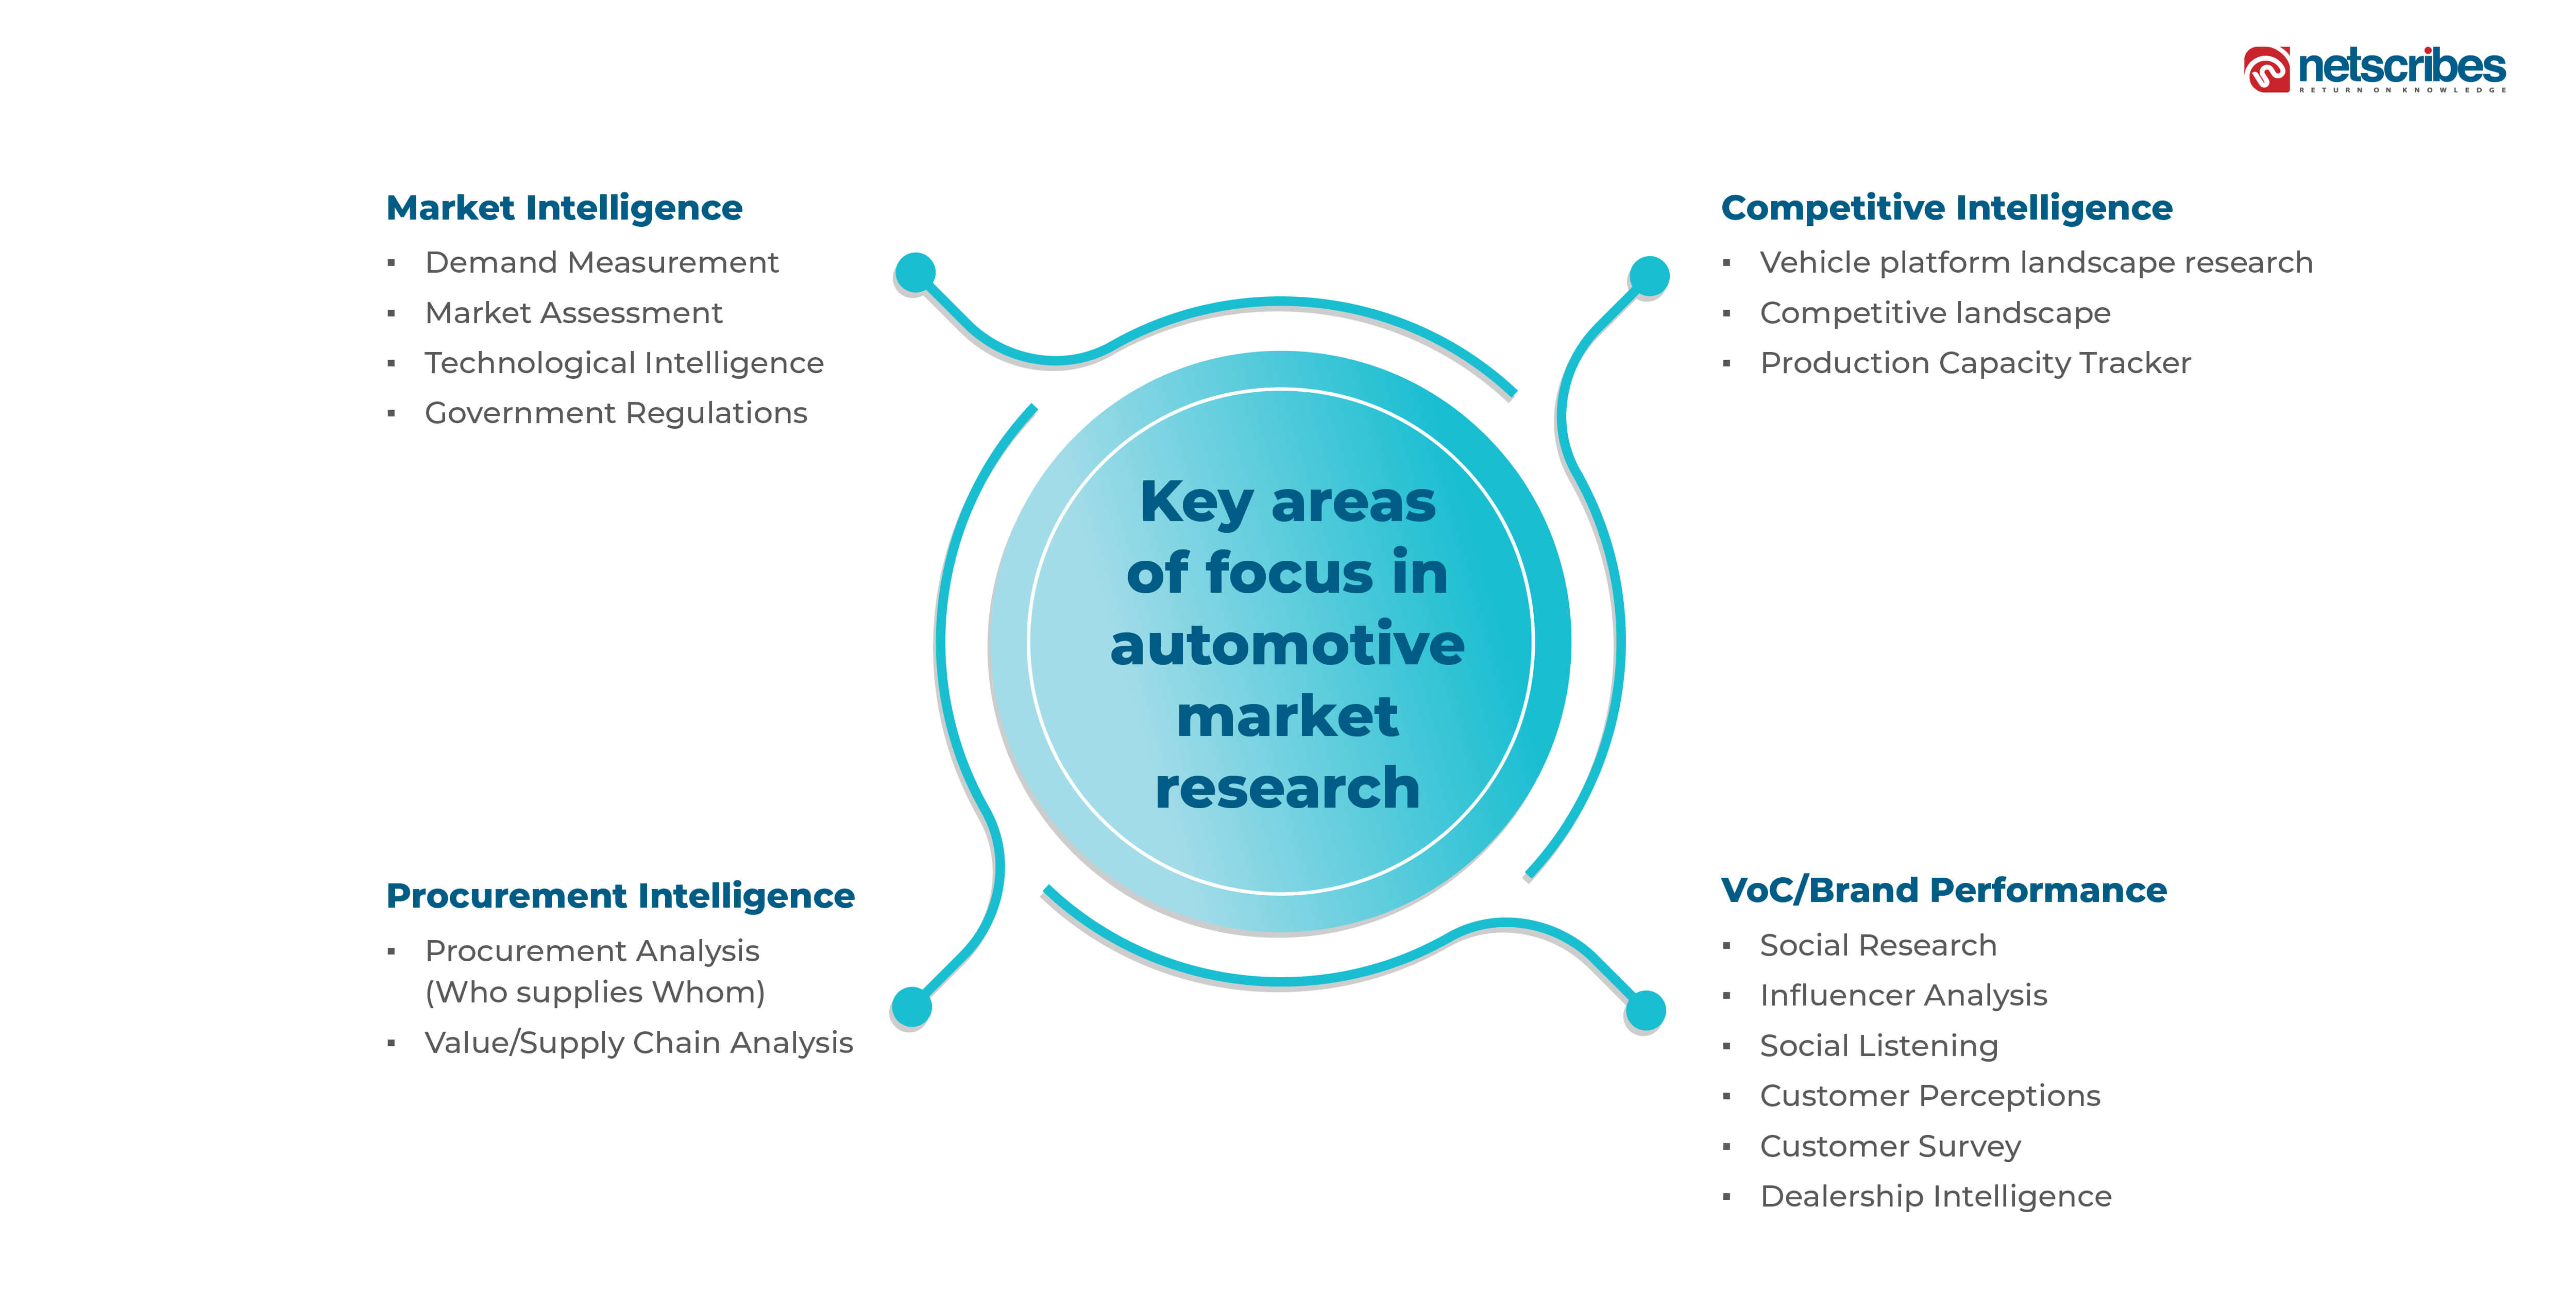 automotive market research - key focus areas